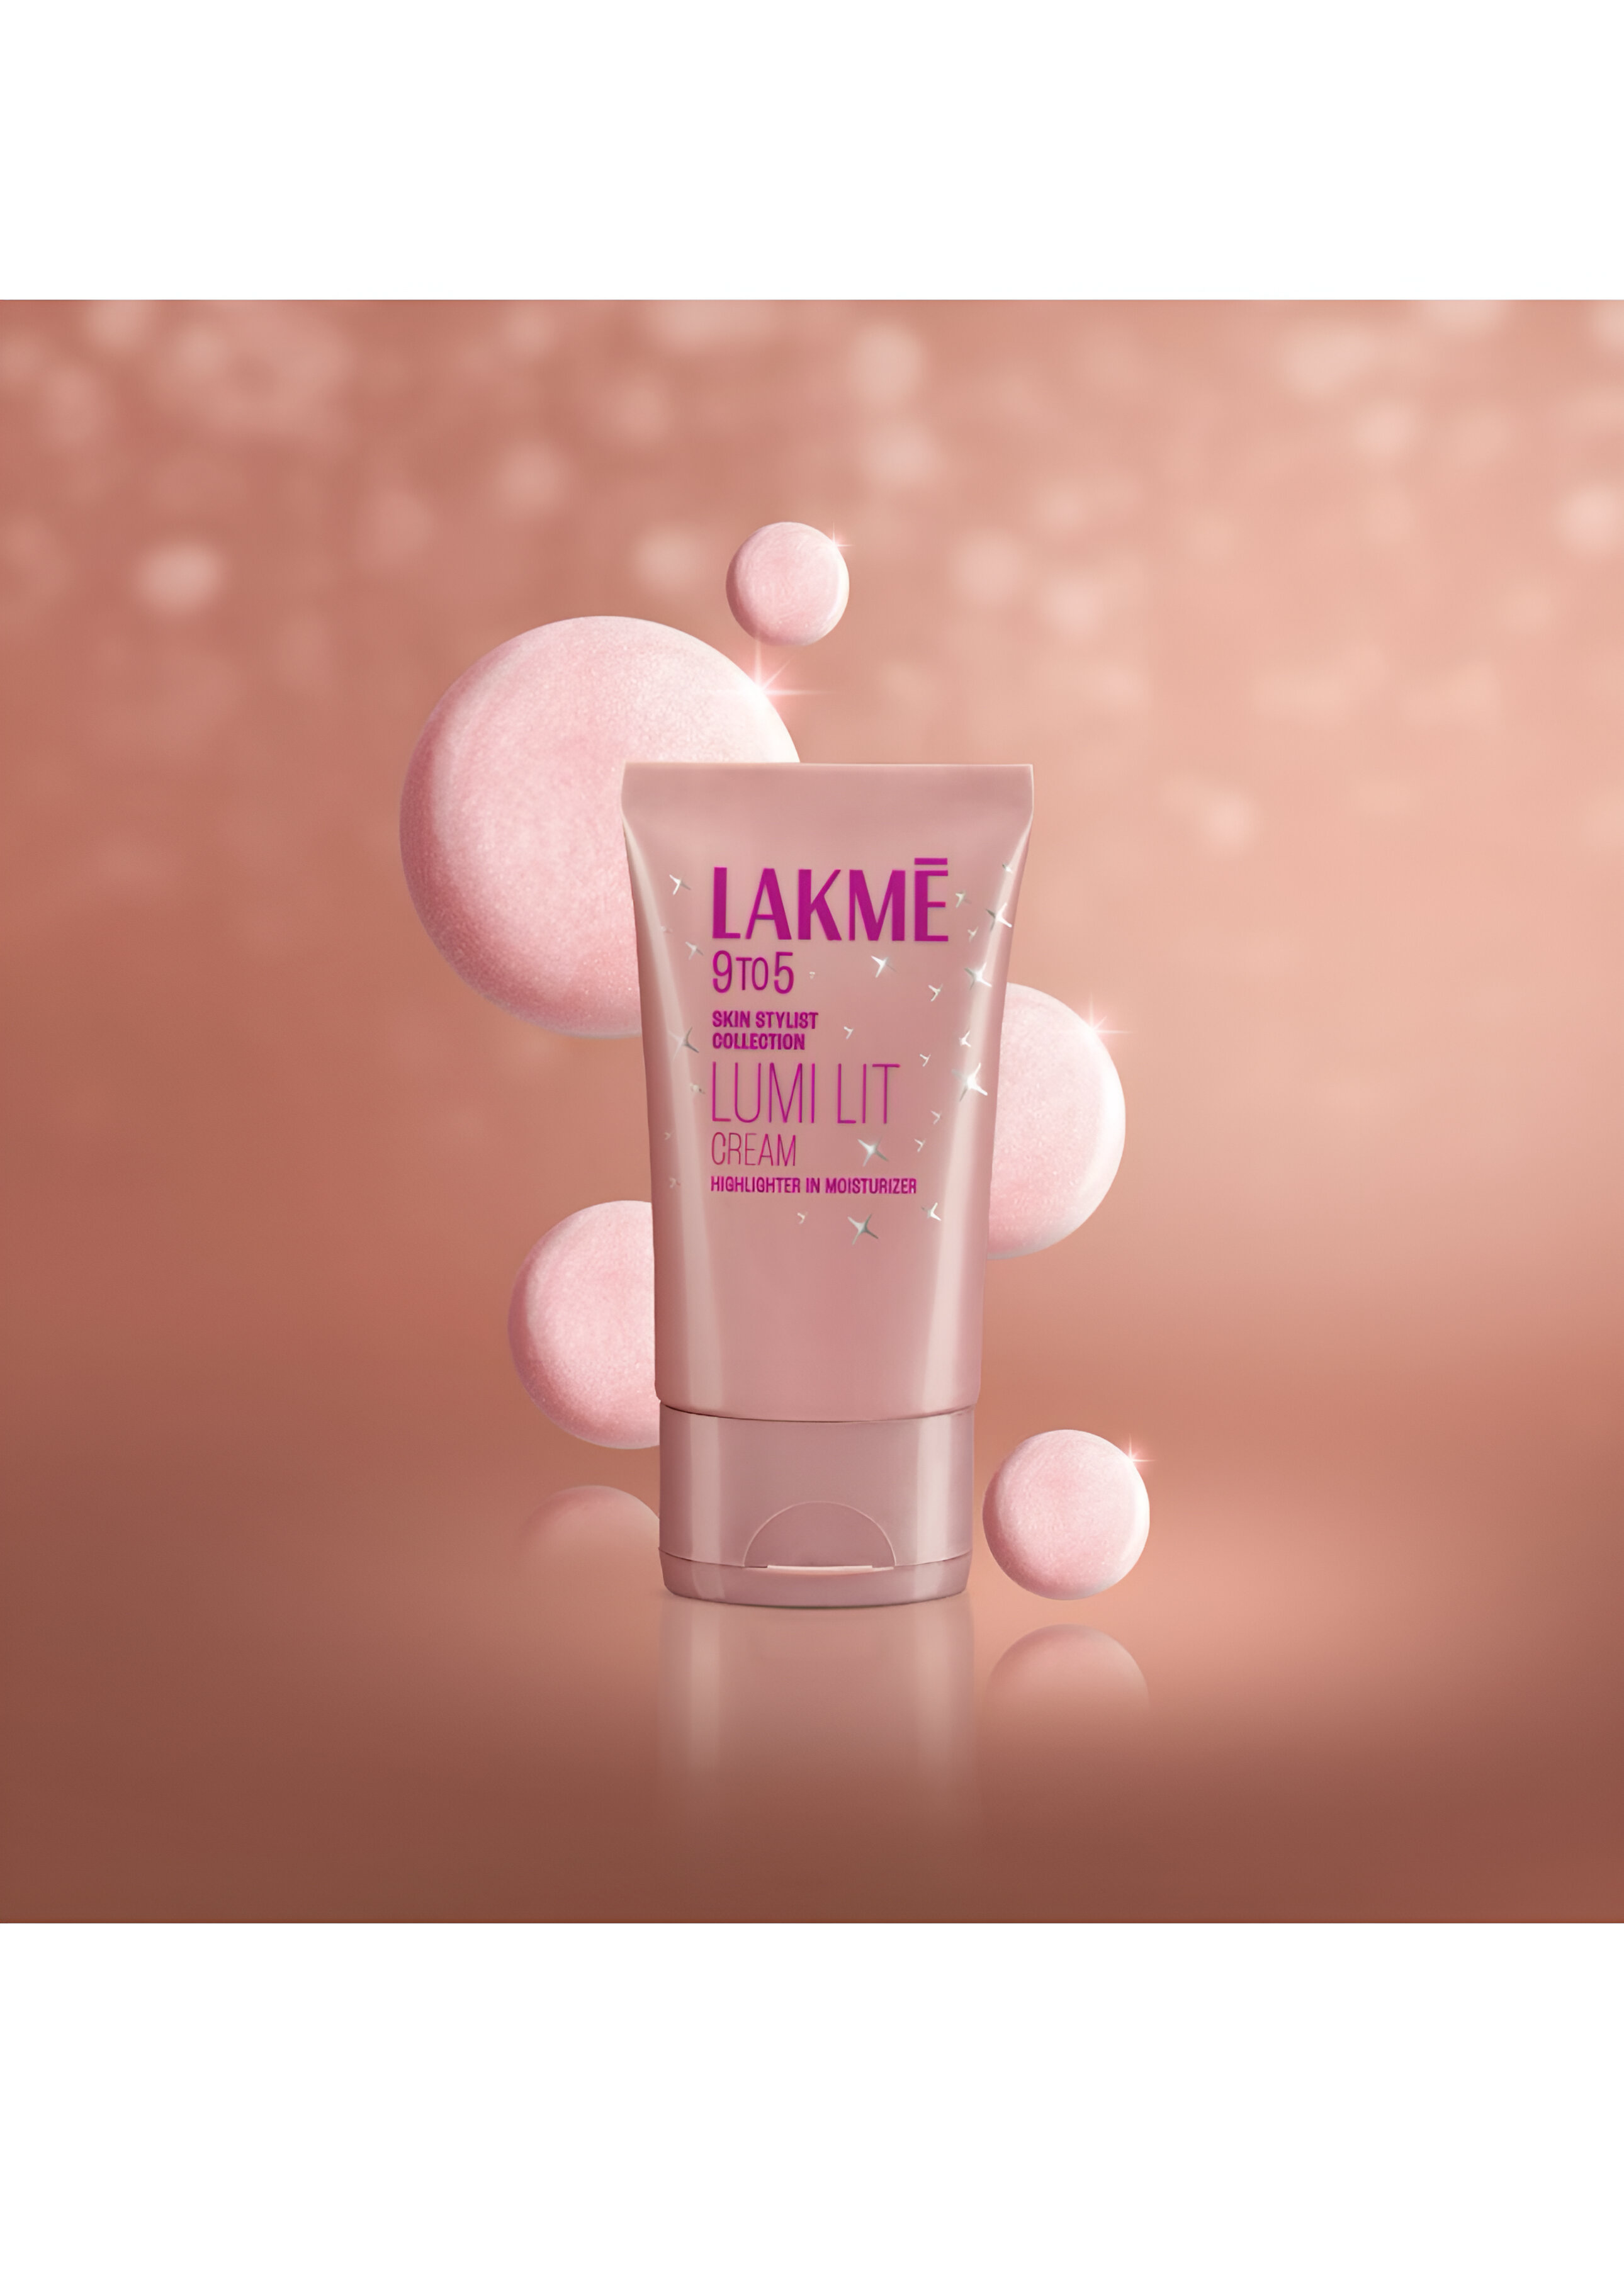 Lakme Lumi Lit Cream Moisturizer + Highlighter with Niacinamide & Hyaluronic Acid